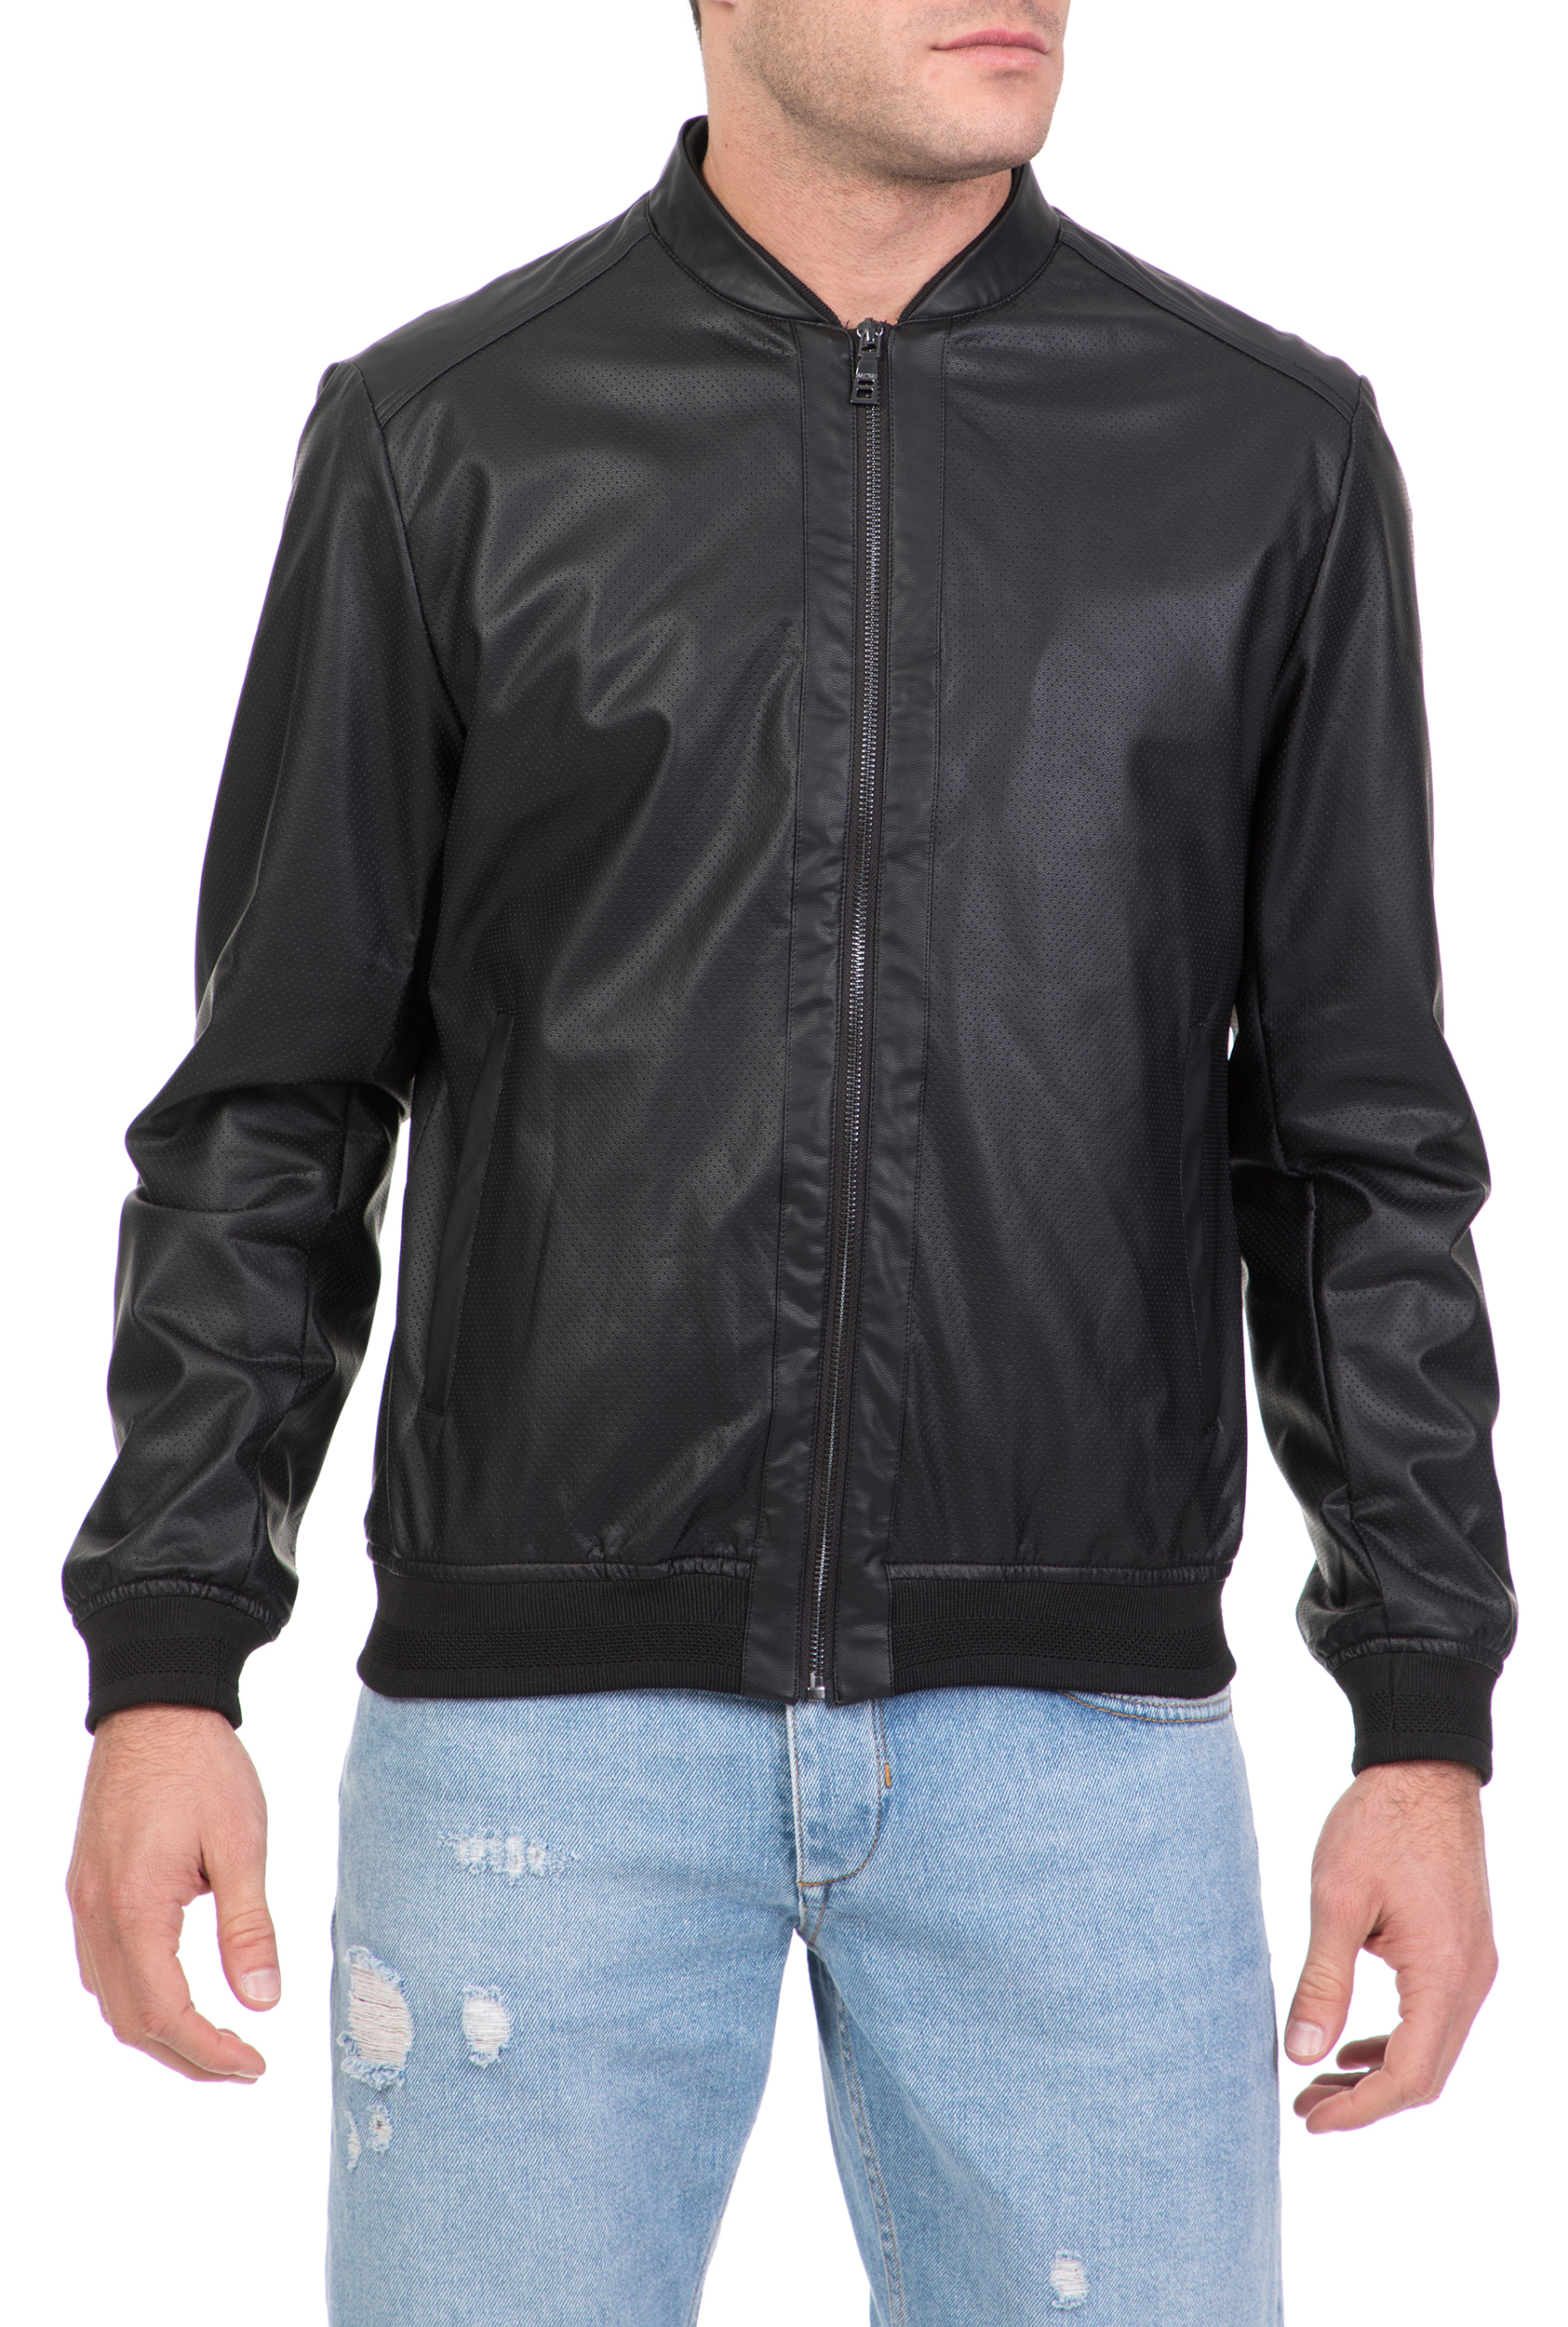 SSEINSE - Ανδρικό δερμάτινο jacket SSEINSE μαύρο Ανδρικά/Ρούχα/Πανωφόρια/Δερμάτινα τζάκετς